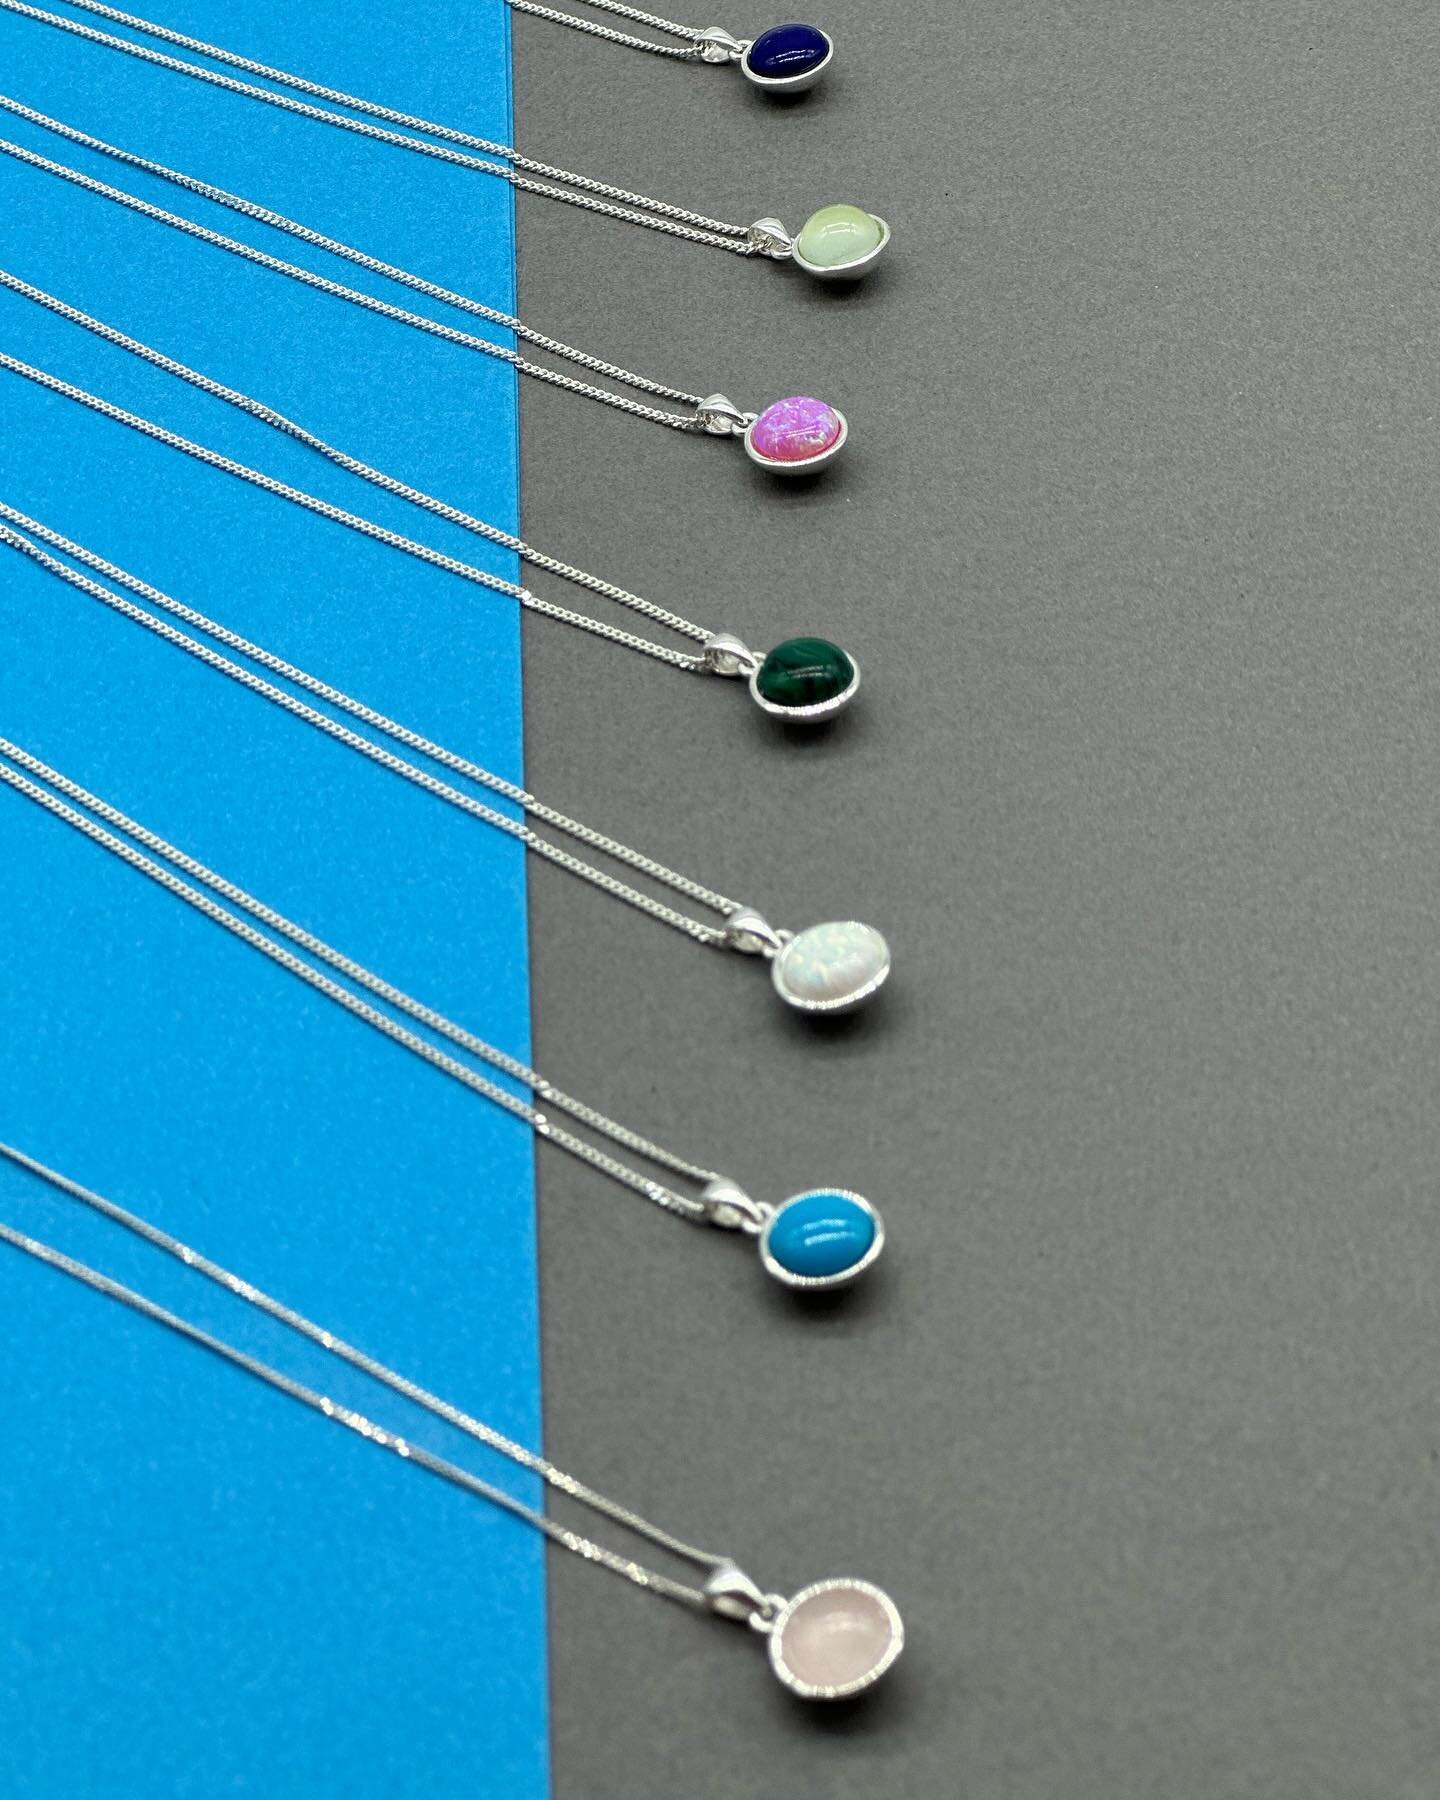 Sterling silver pendants in various stones and colours - we love them! #tingtingjewellery #pendants #sterlingsilver #treatyourself #pendantsofinstagram #shoplocal #bearsdenloveslocal